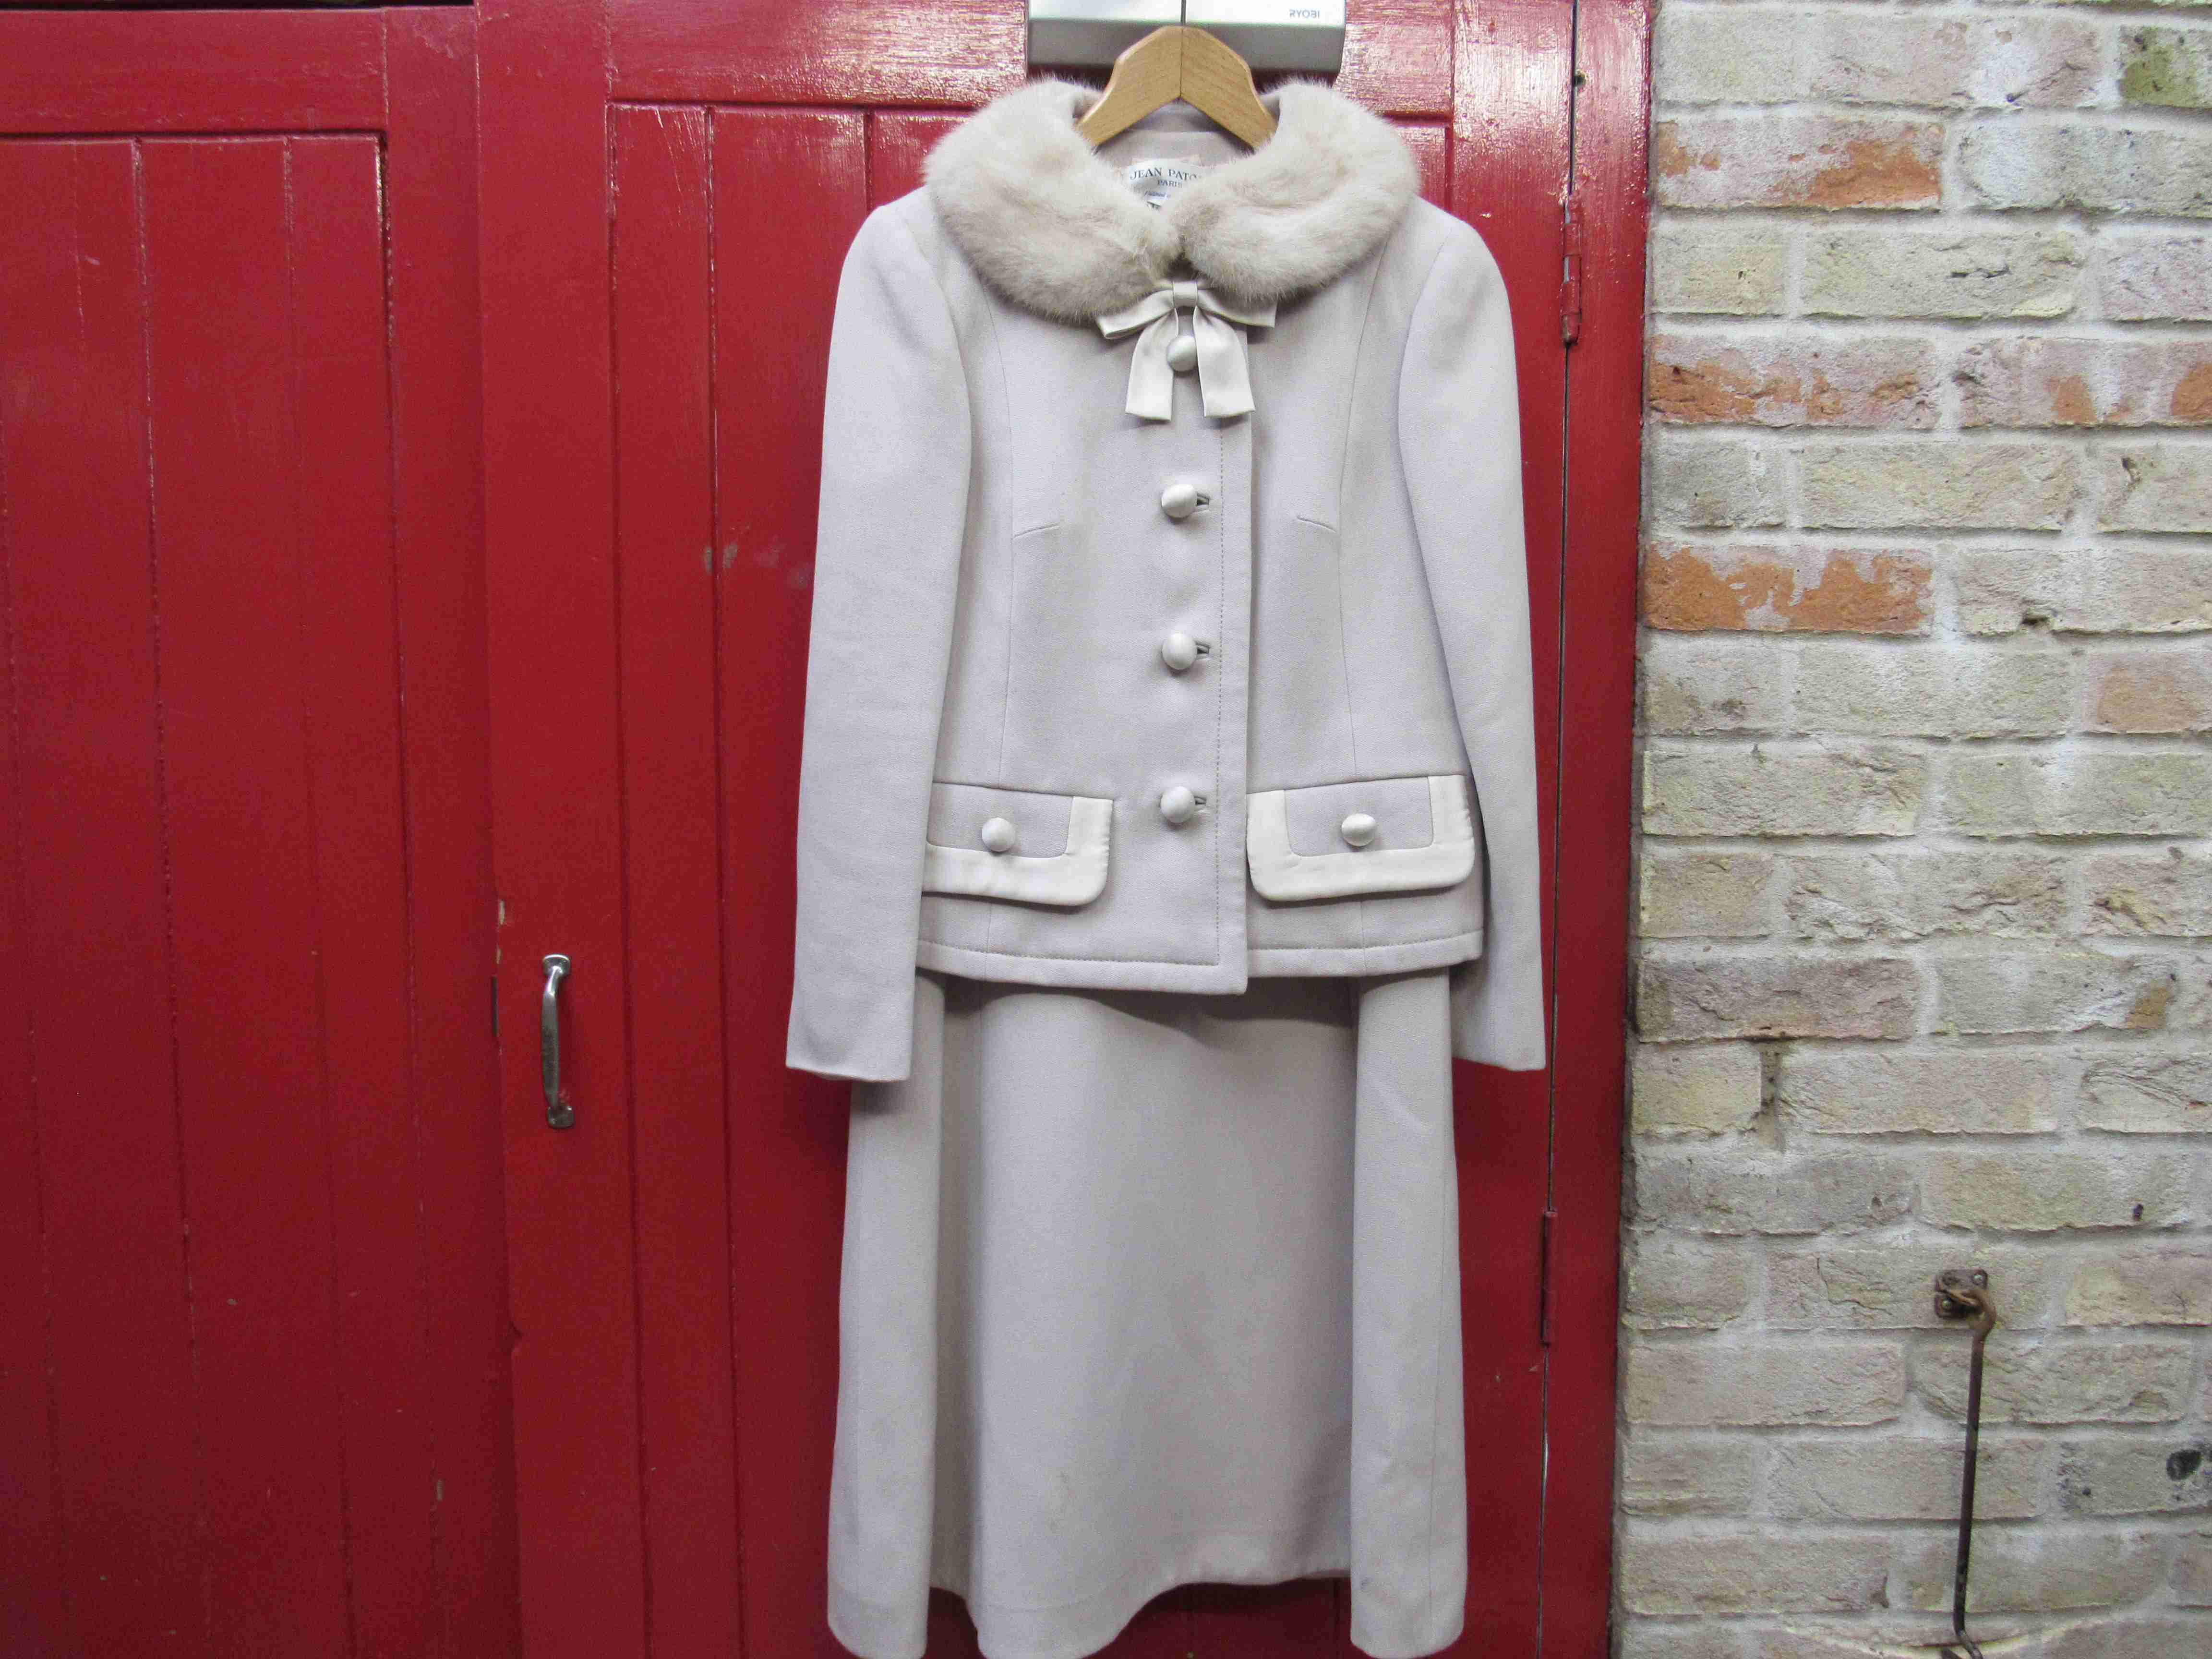 Jean Patou Paris classic light beige wool two piece dress and jacket suit, - Image 5 of 10